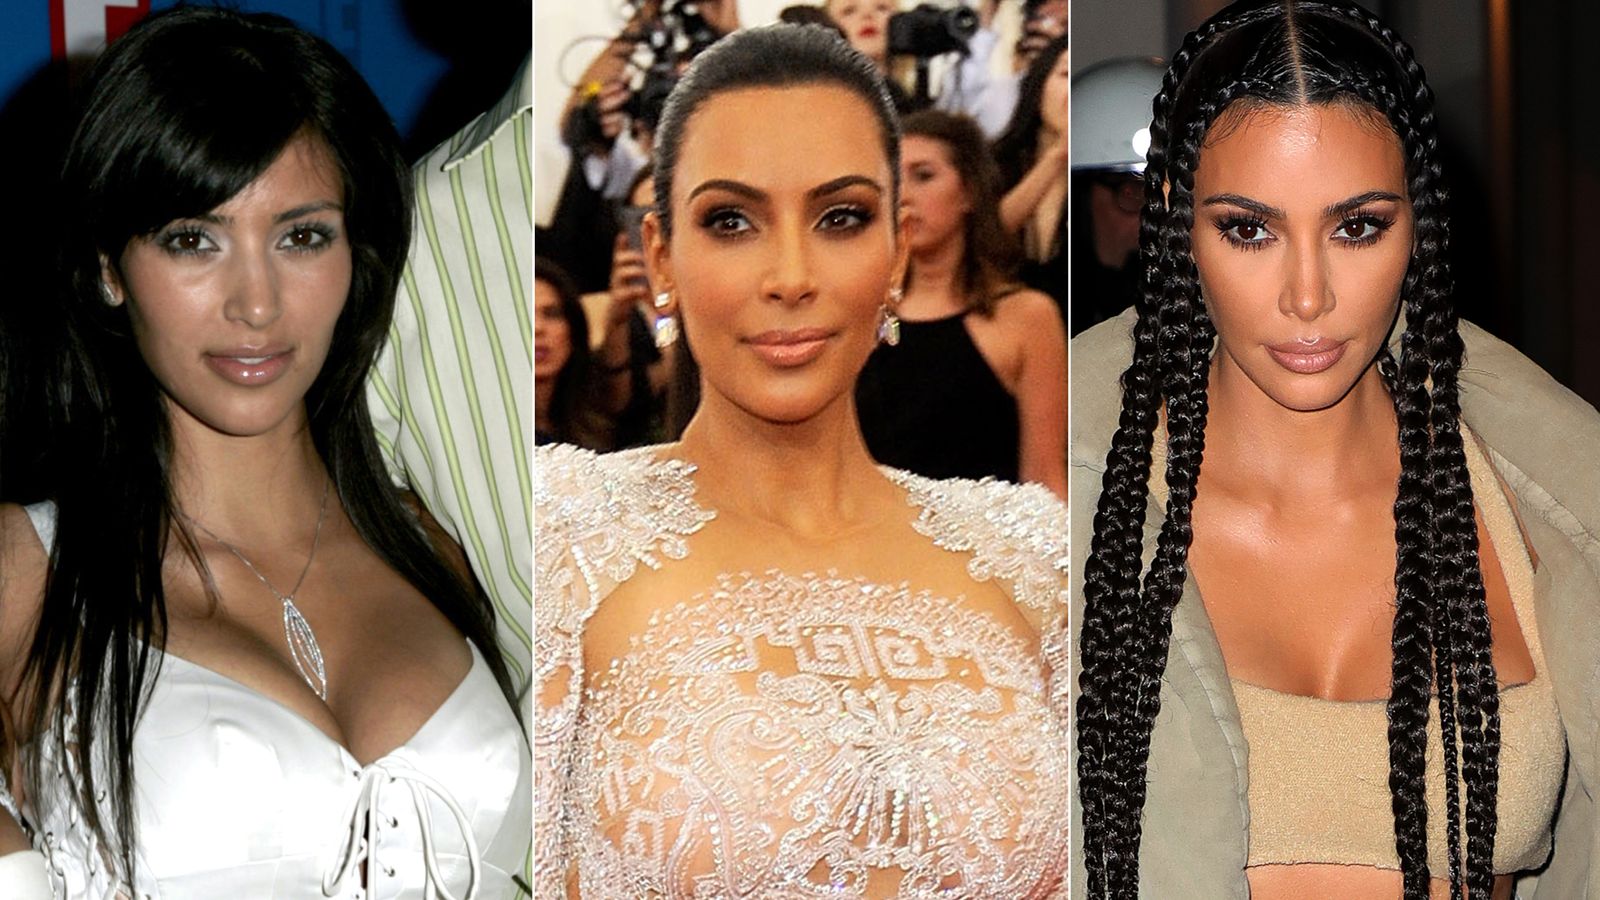 Kim Kardashian Sports Head-to-Toe Leopard Print Outfit for Dinner